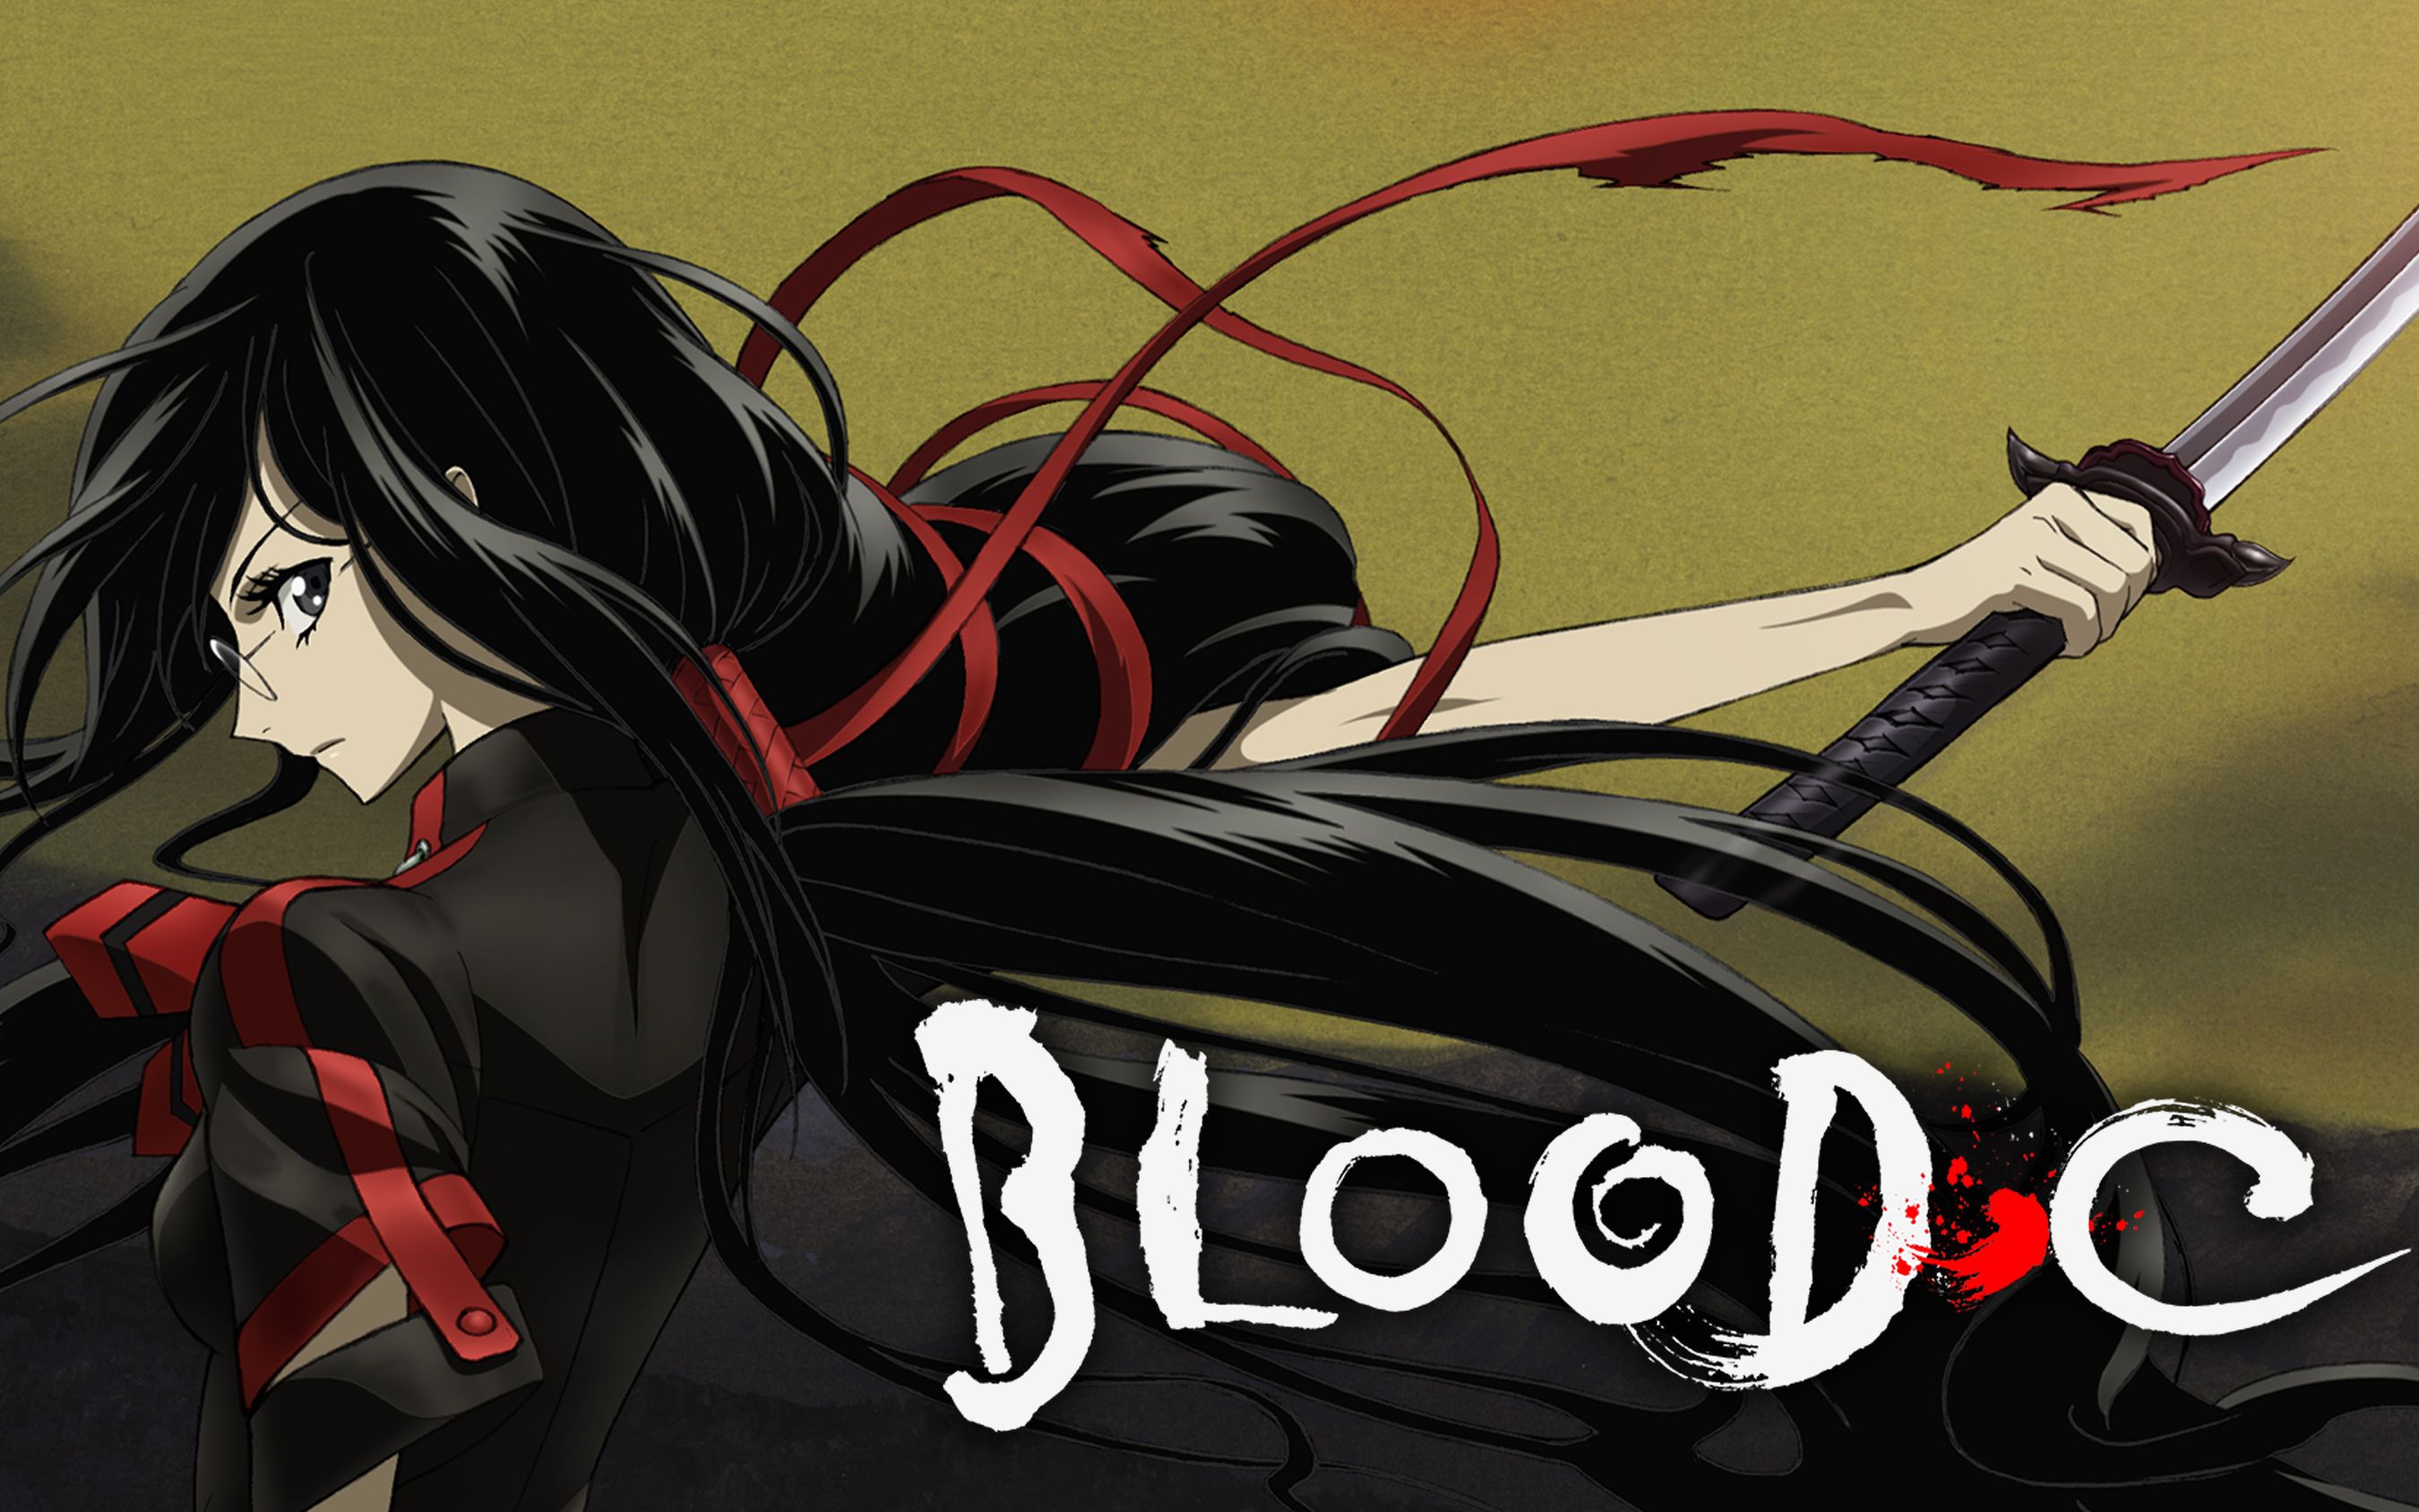 blood-c封面图片